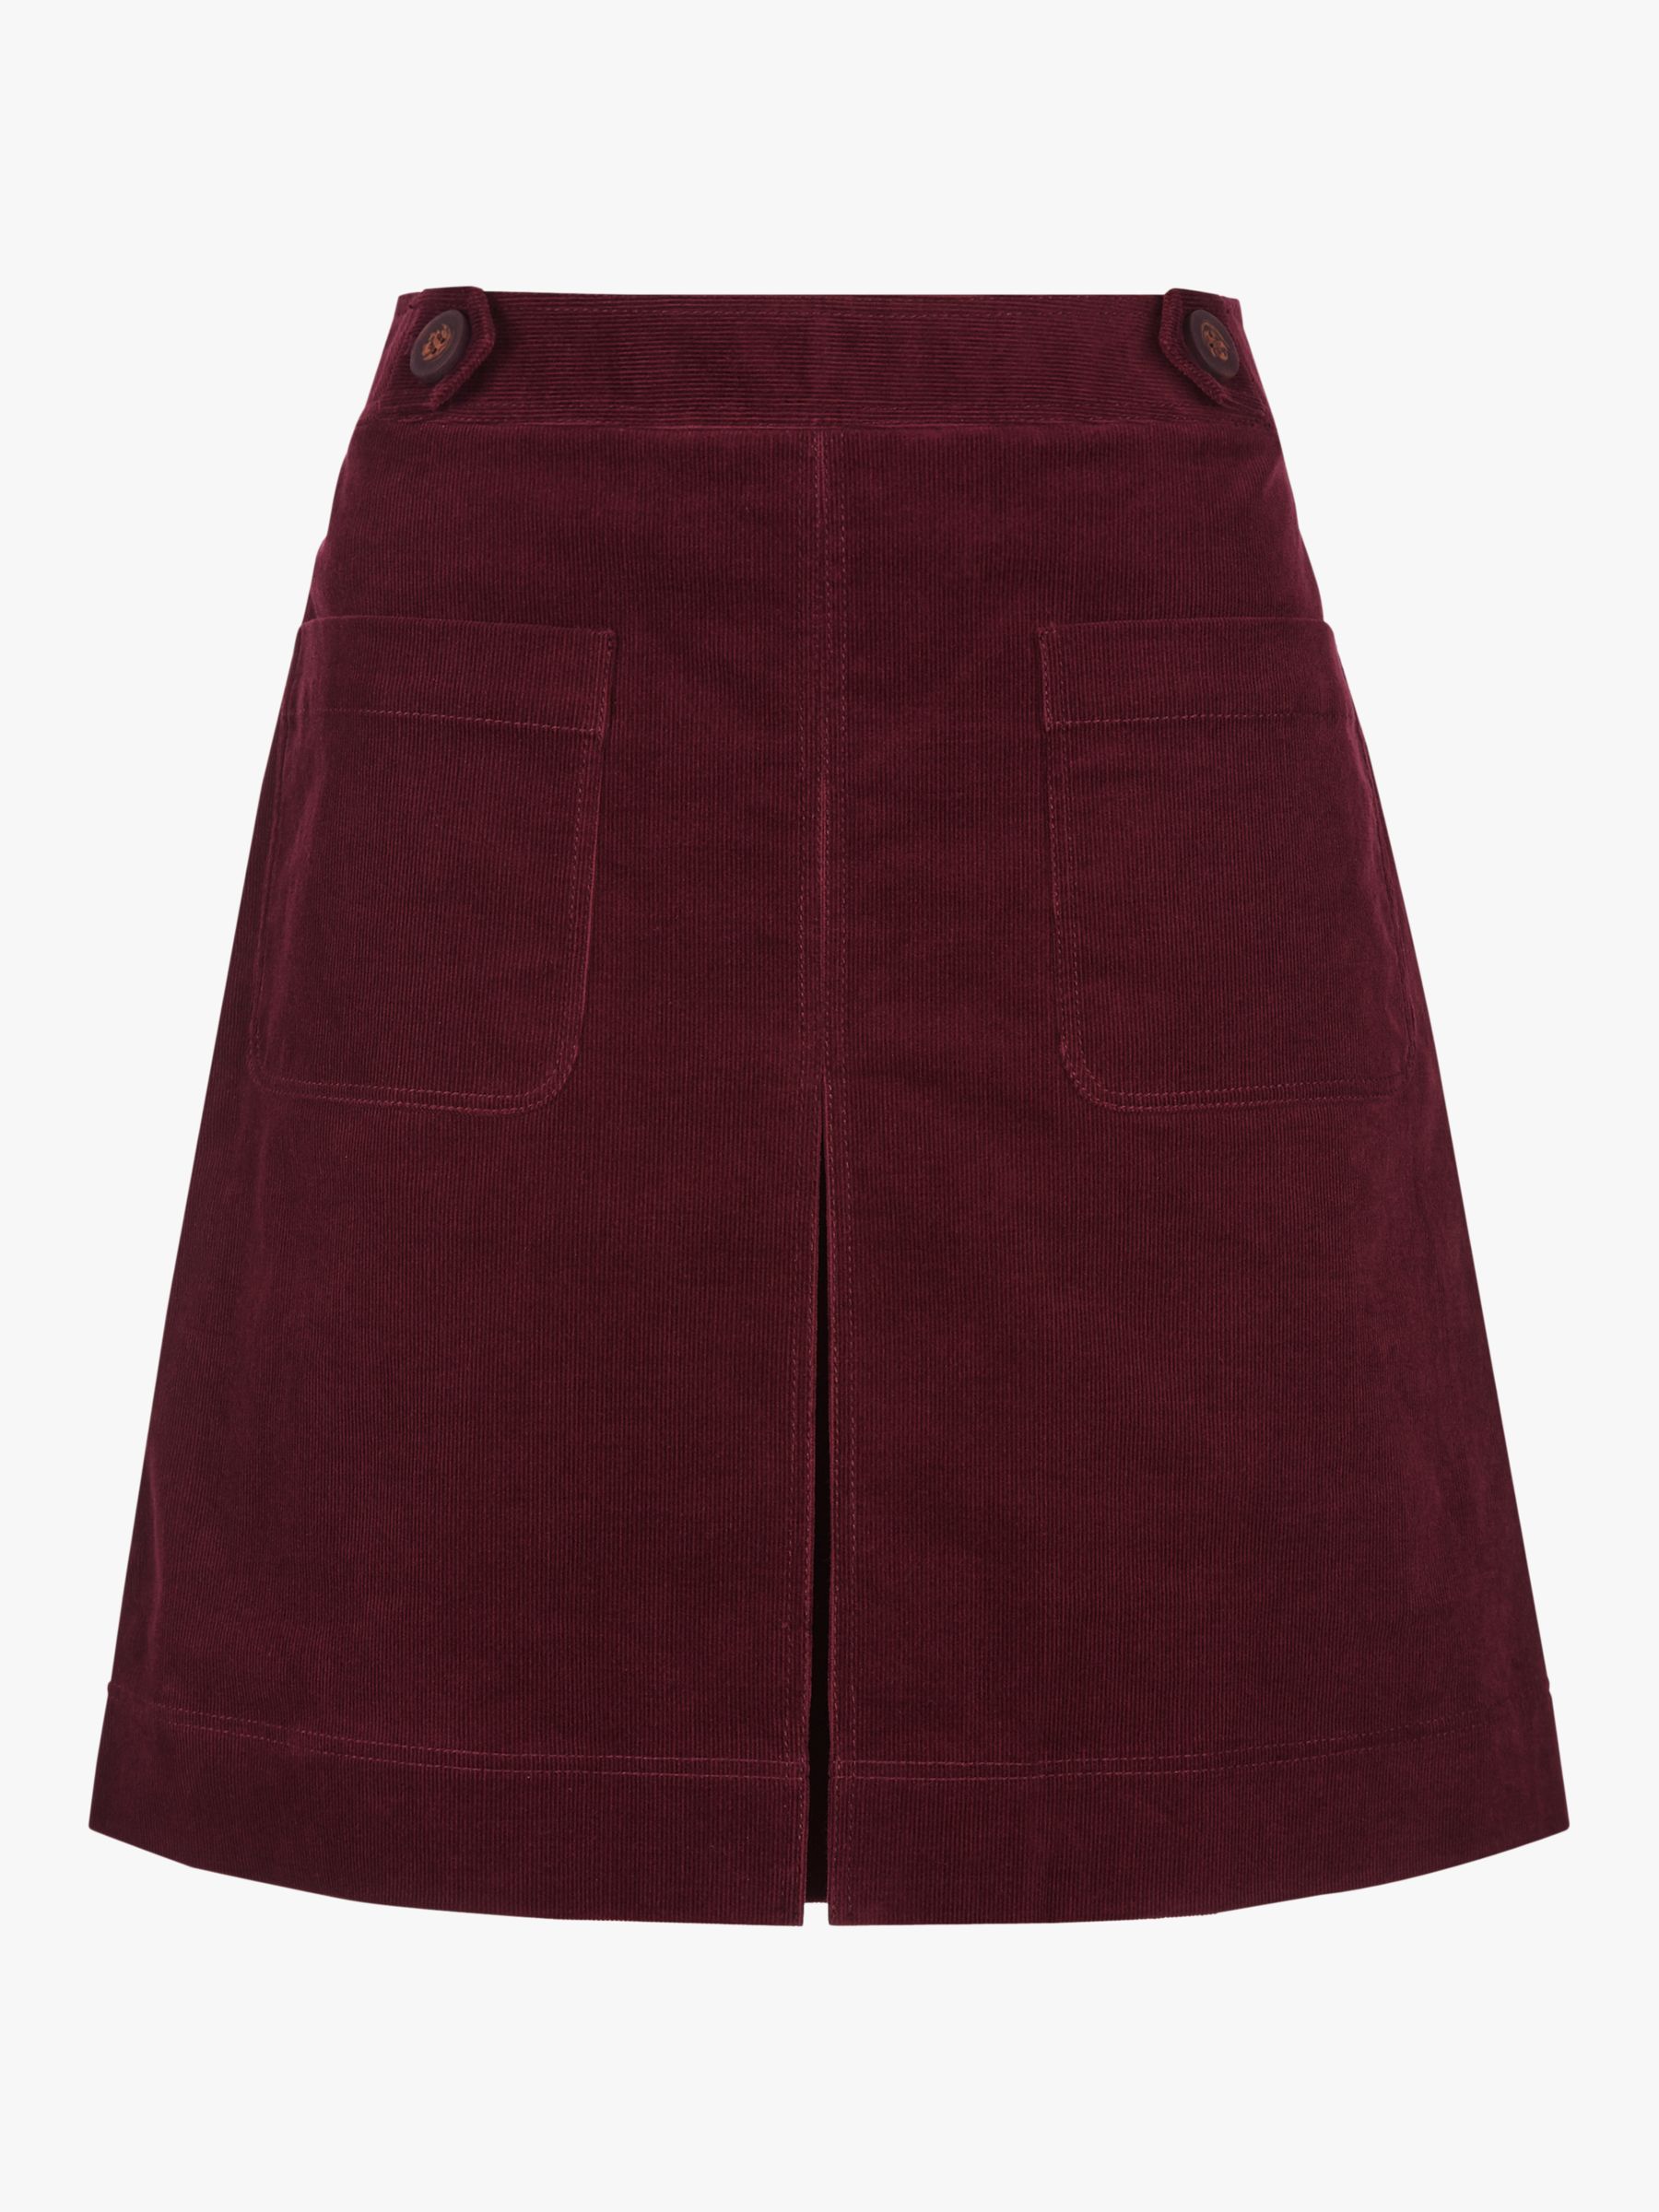 maroon cord skirt